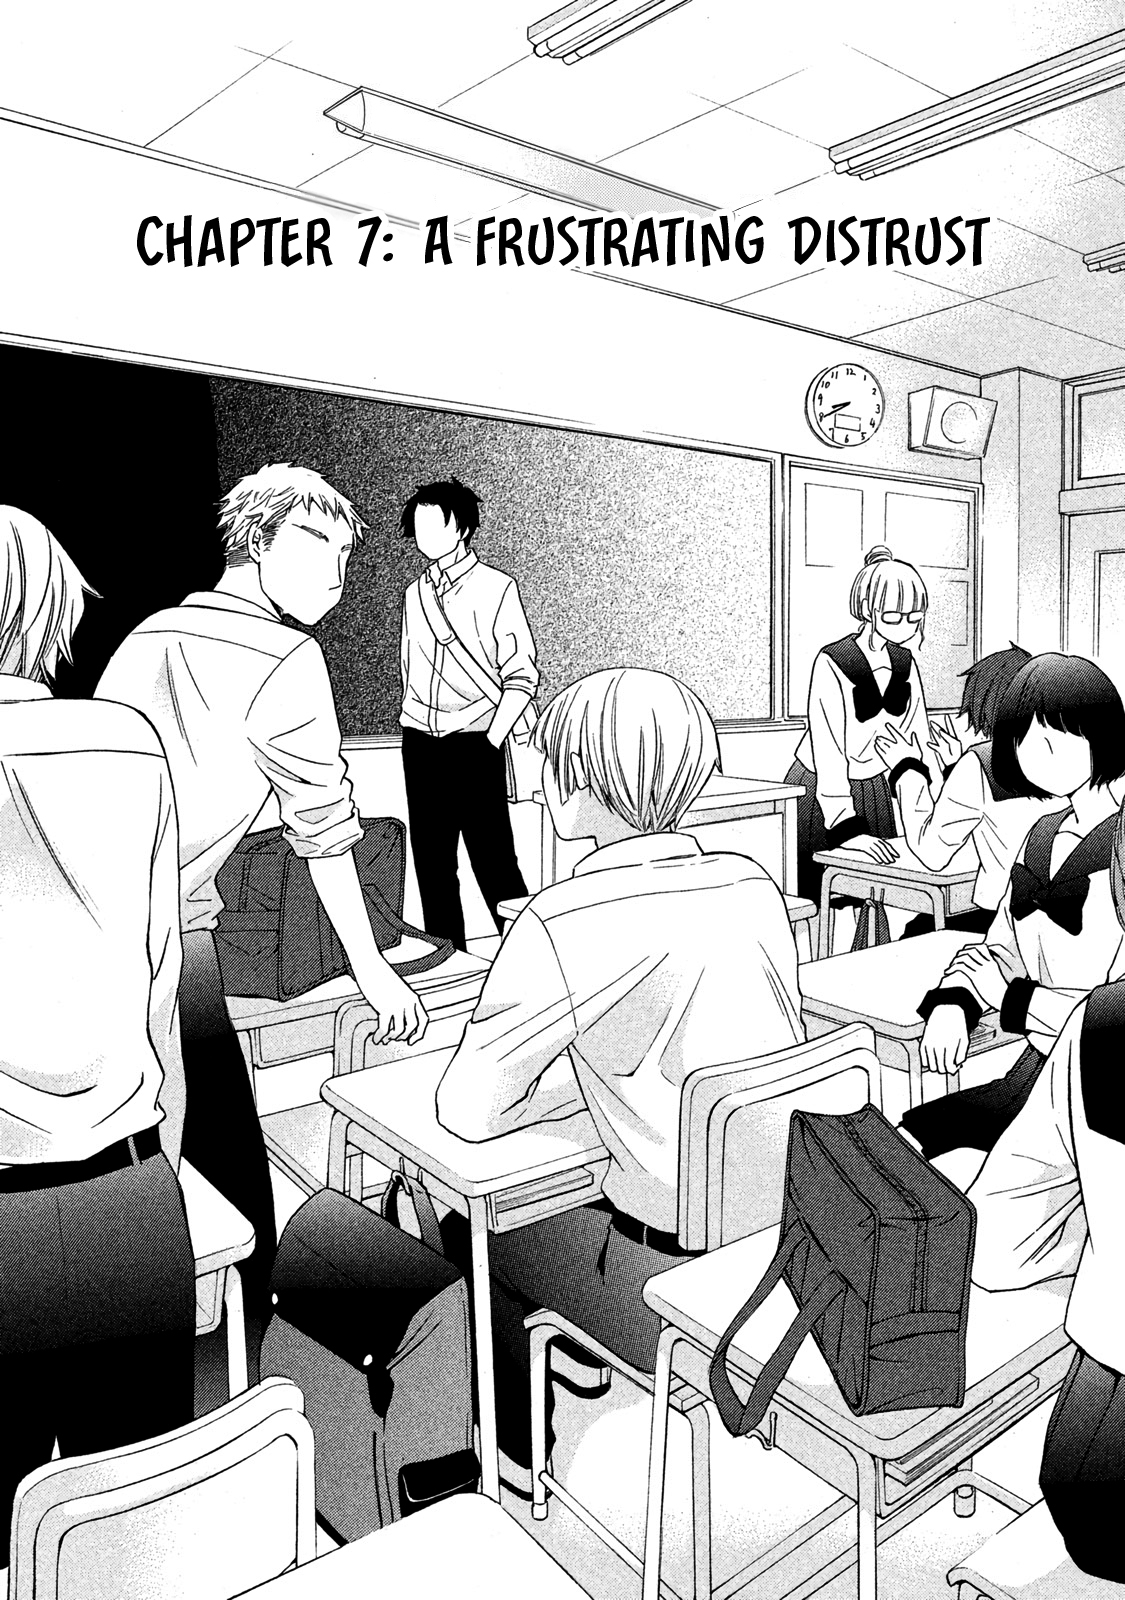 Hanazono and Kazoe's Bizarre After School Rendezvous Vol. 1 Ch. 7 A Frustrating Distrust